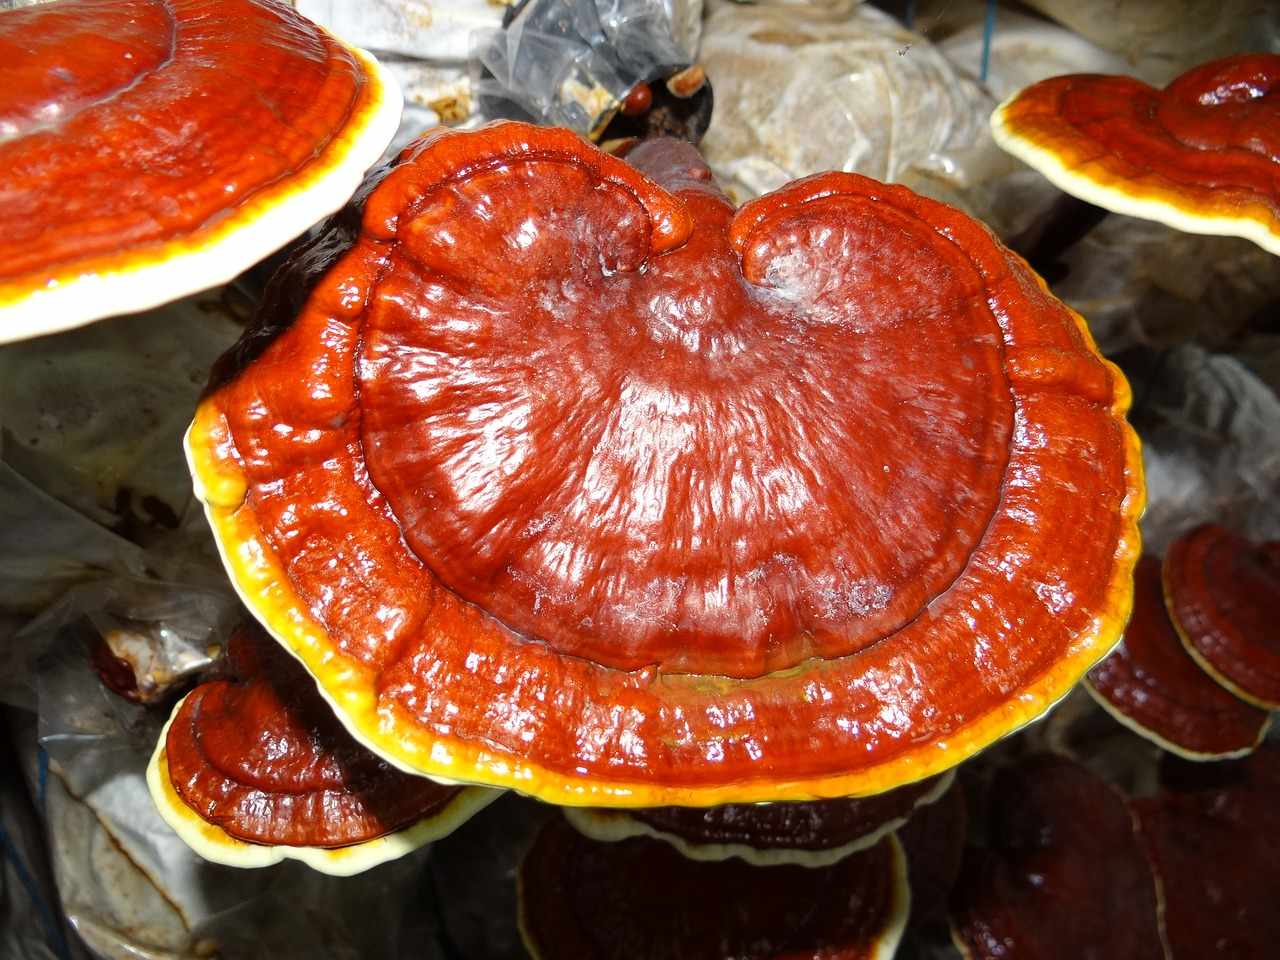 A mushroom called Ganoderma